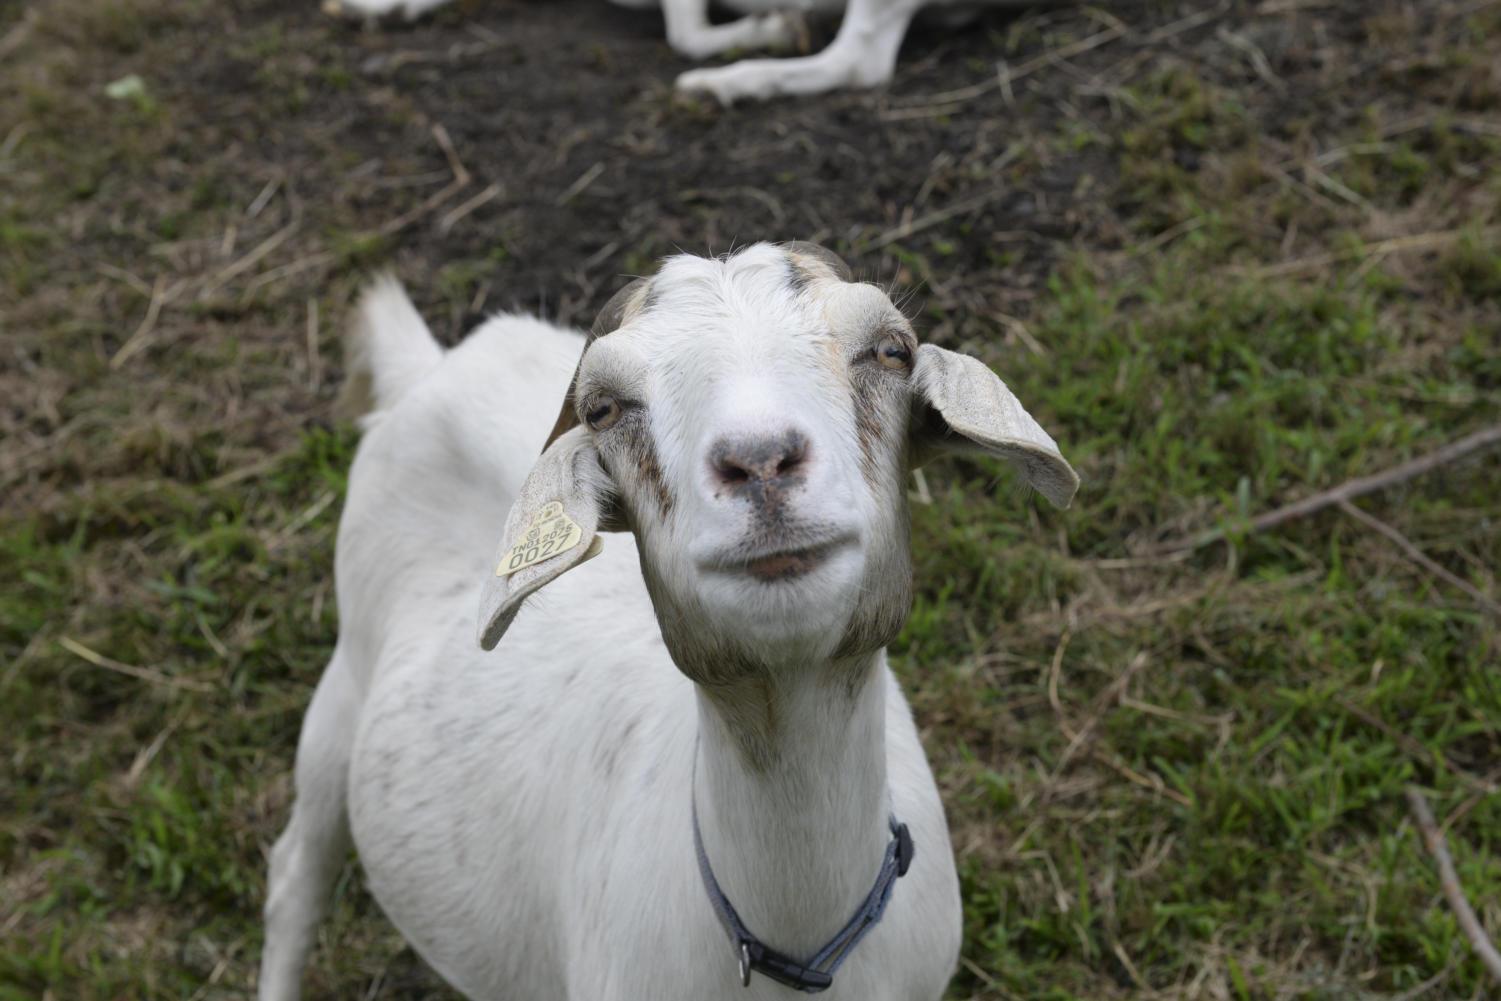 GALLERY: Goatscaping behind Chevron - The Pitt News